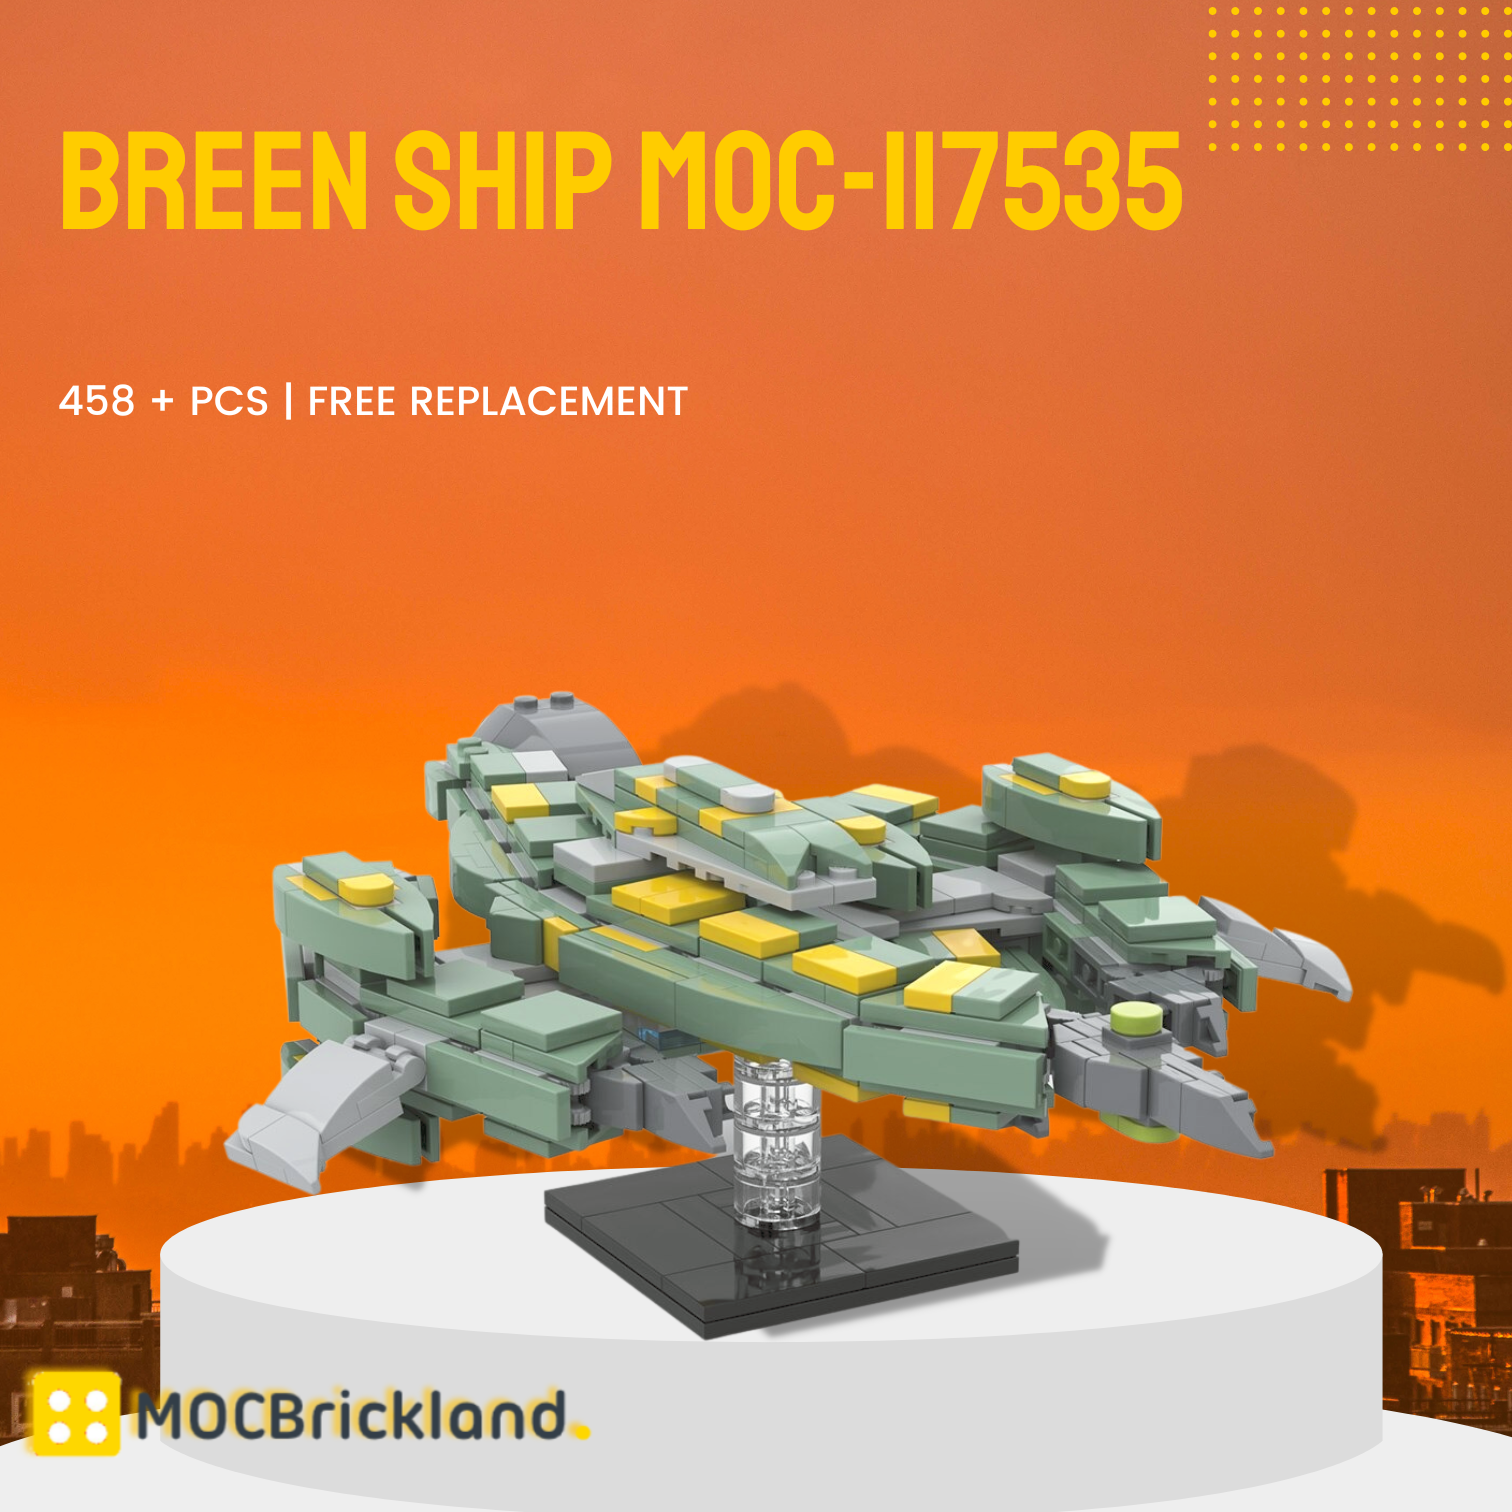 Breen Ship MOC 117535